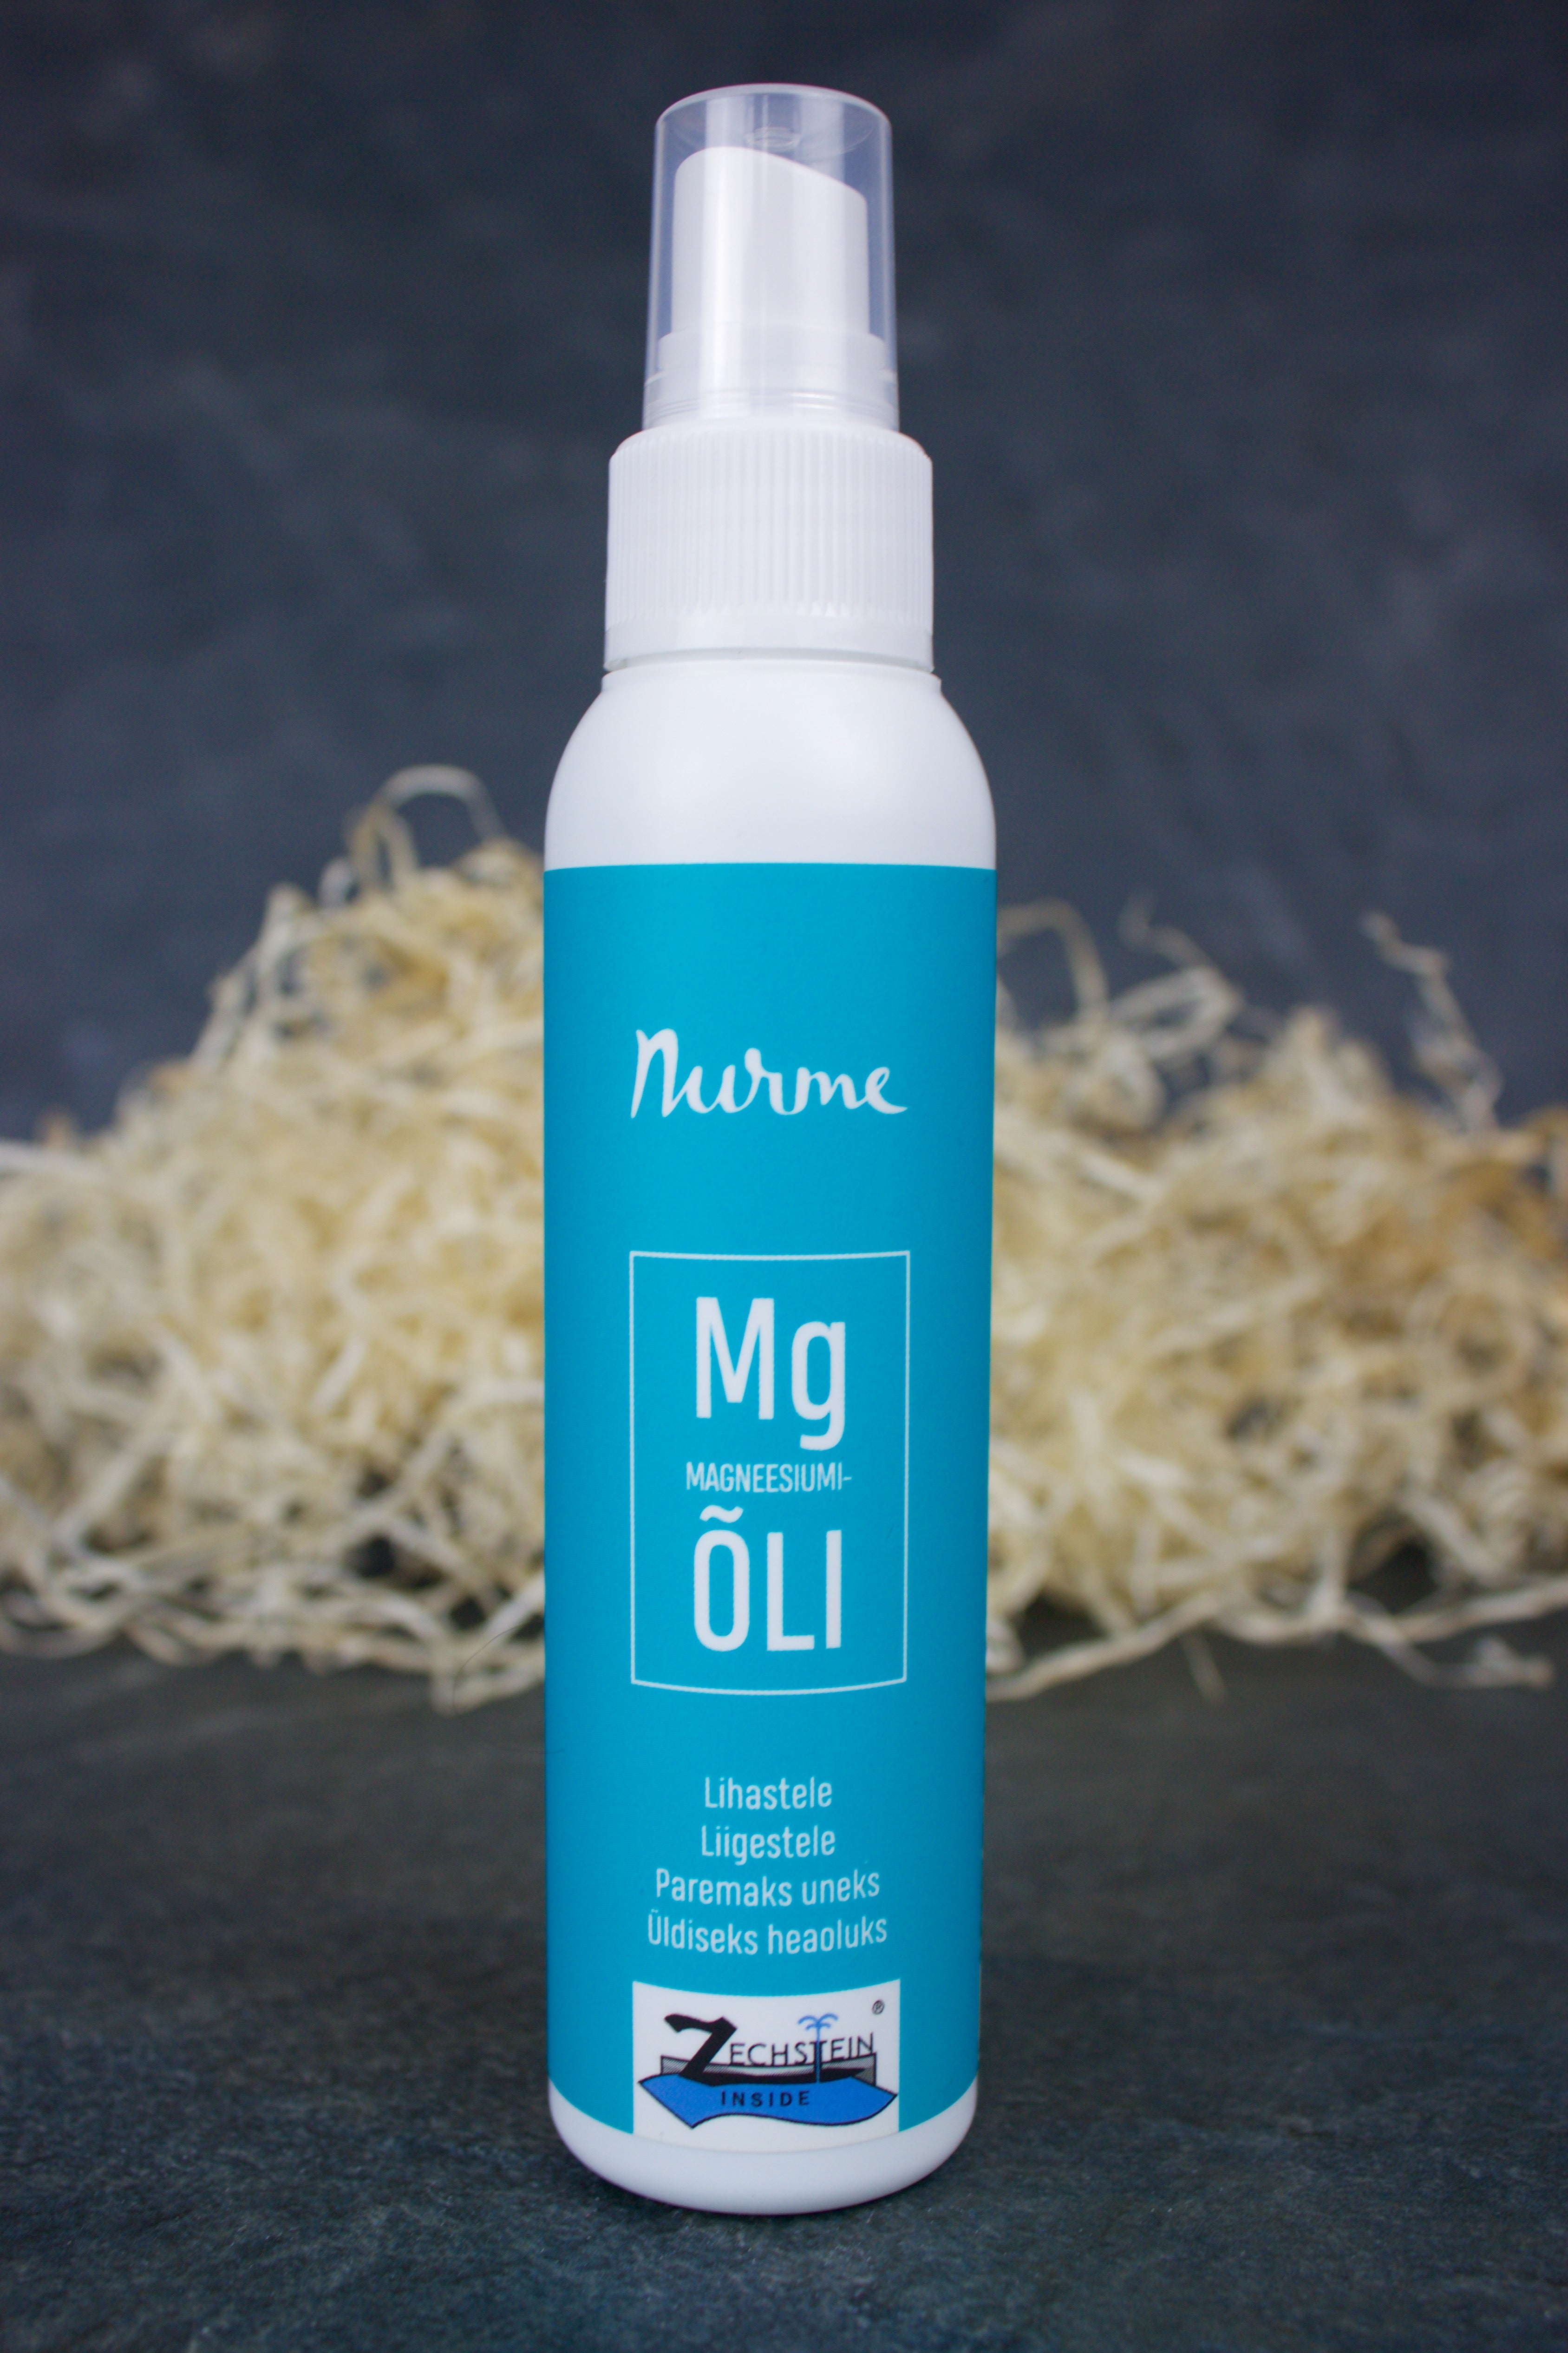 Nurme- Magnesium olie - Nordic- wellness.dk